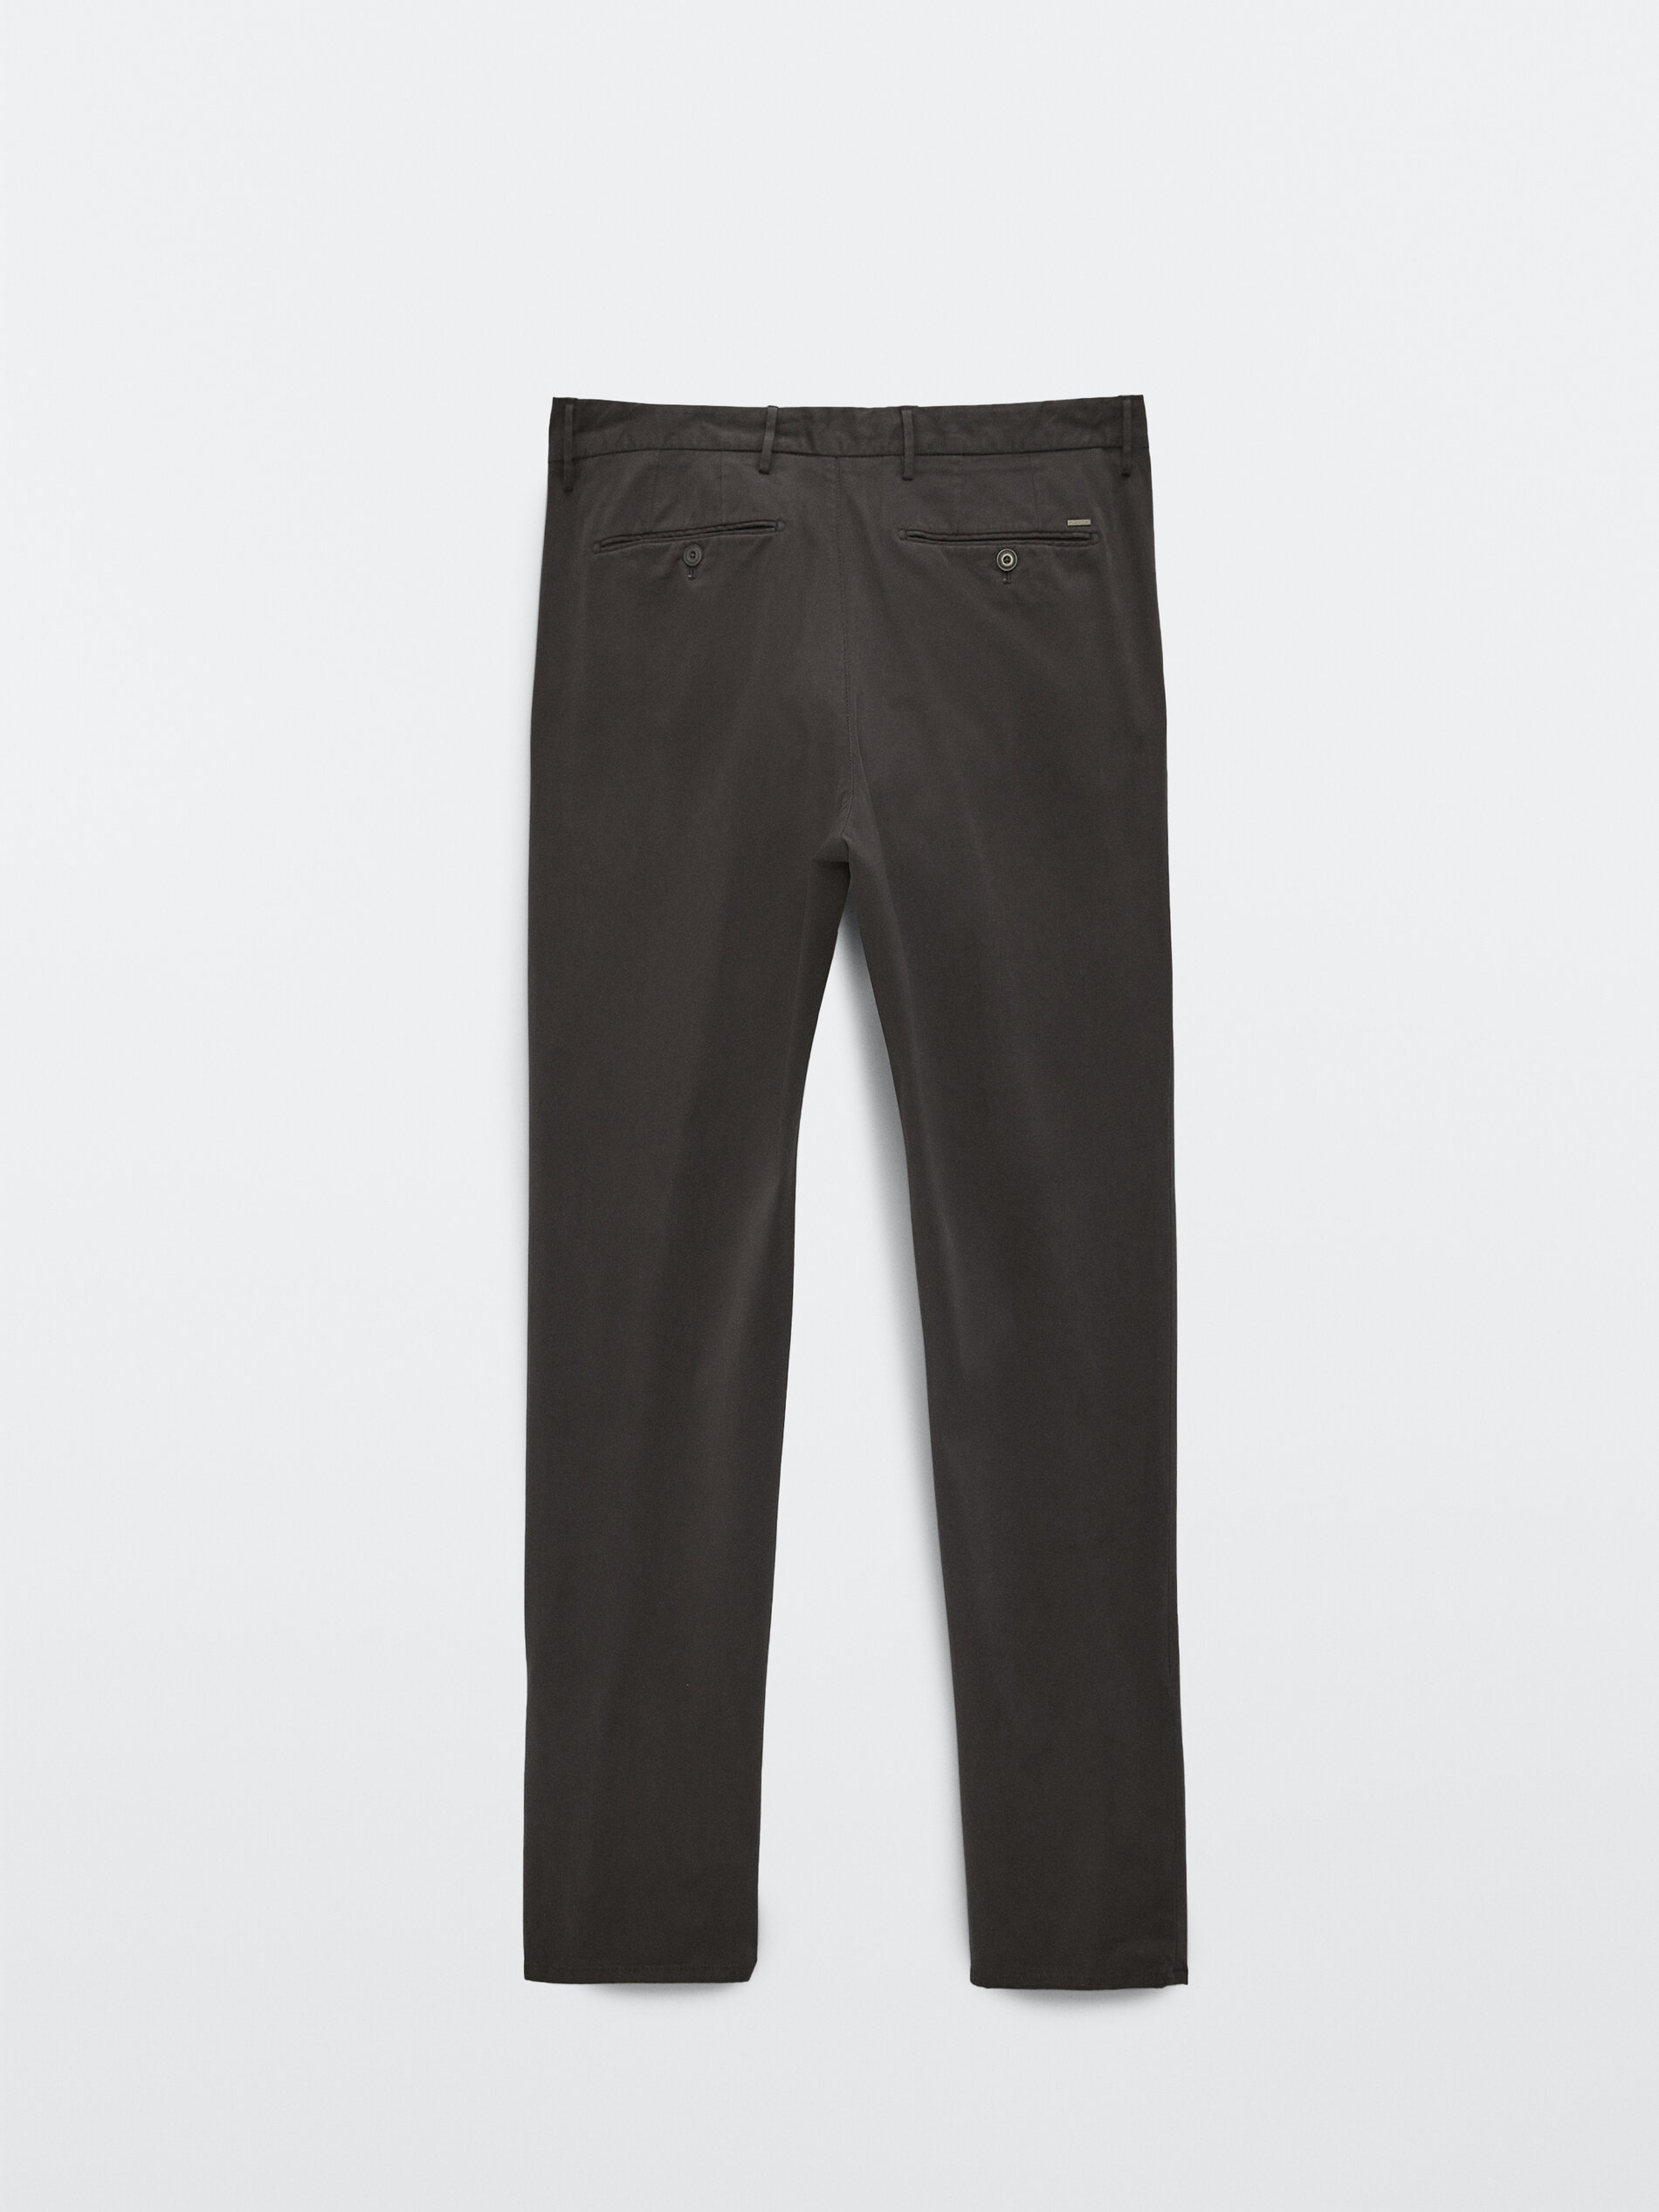 Buy SUCCESS Slim Fit Trouser for Men Black at Amazon.in